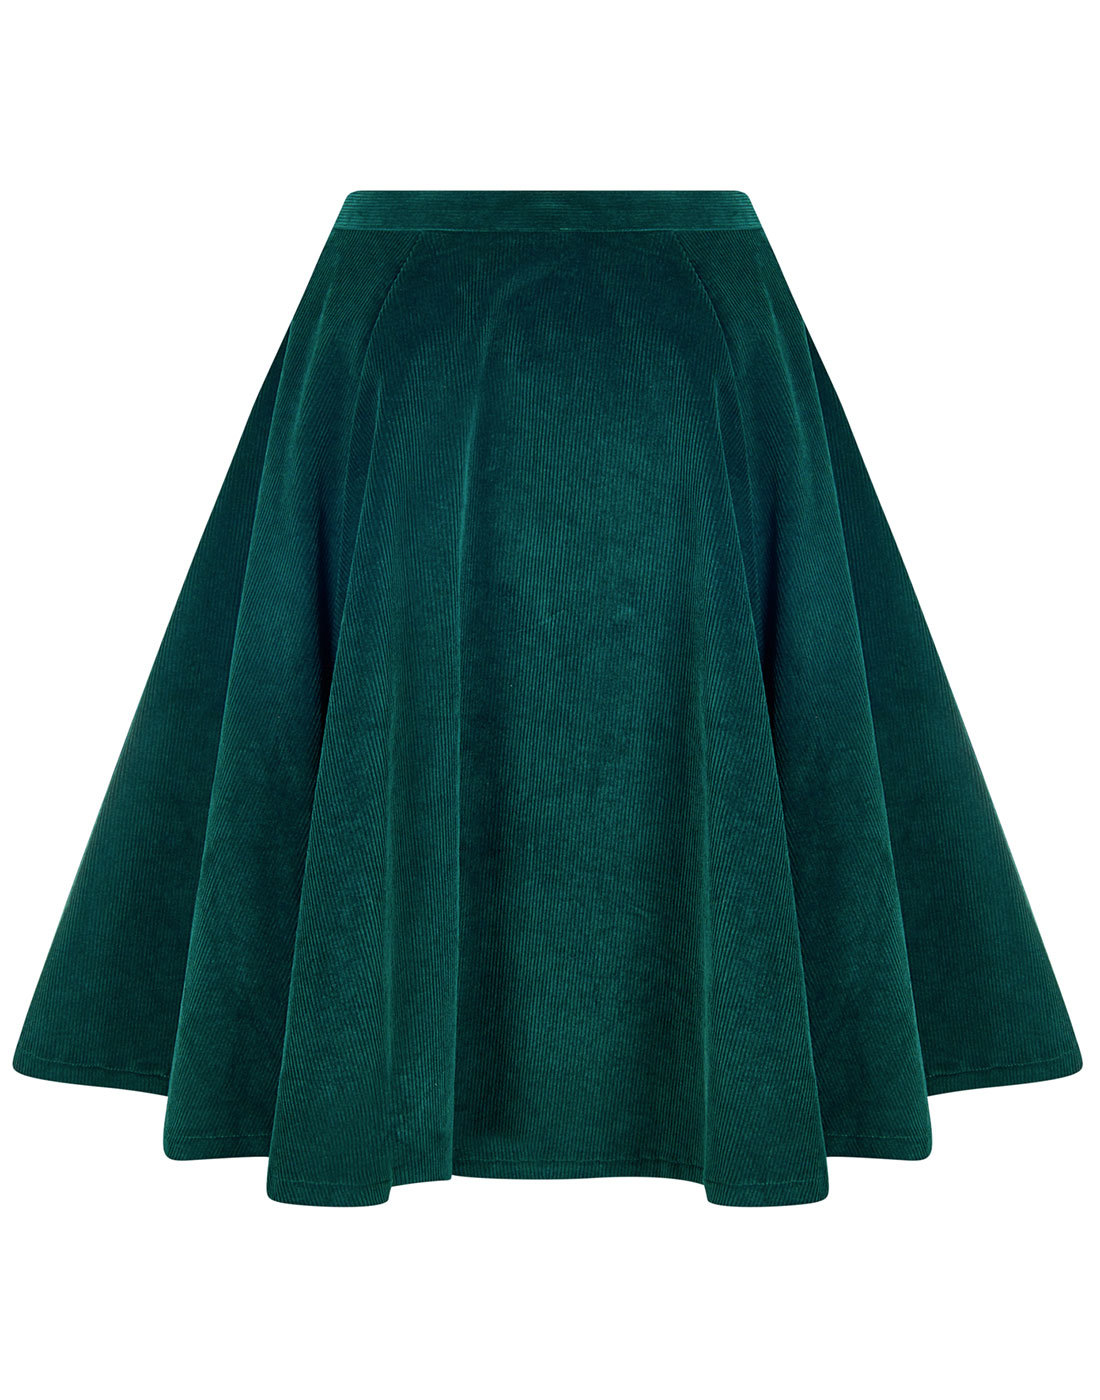 BRIGHT & BEAUTIFUL Tia Retro 1960s Corduroy Middy Skirt in Green